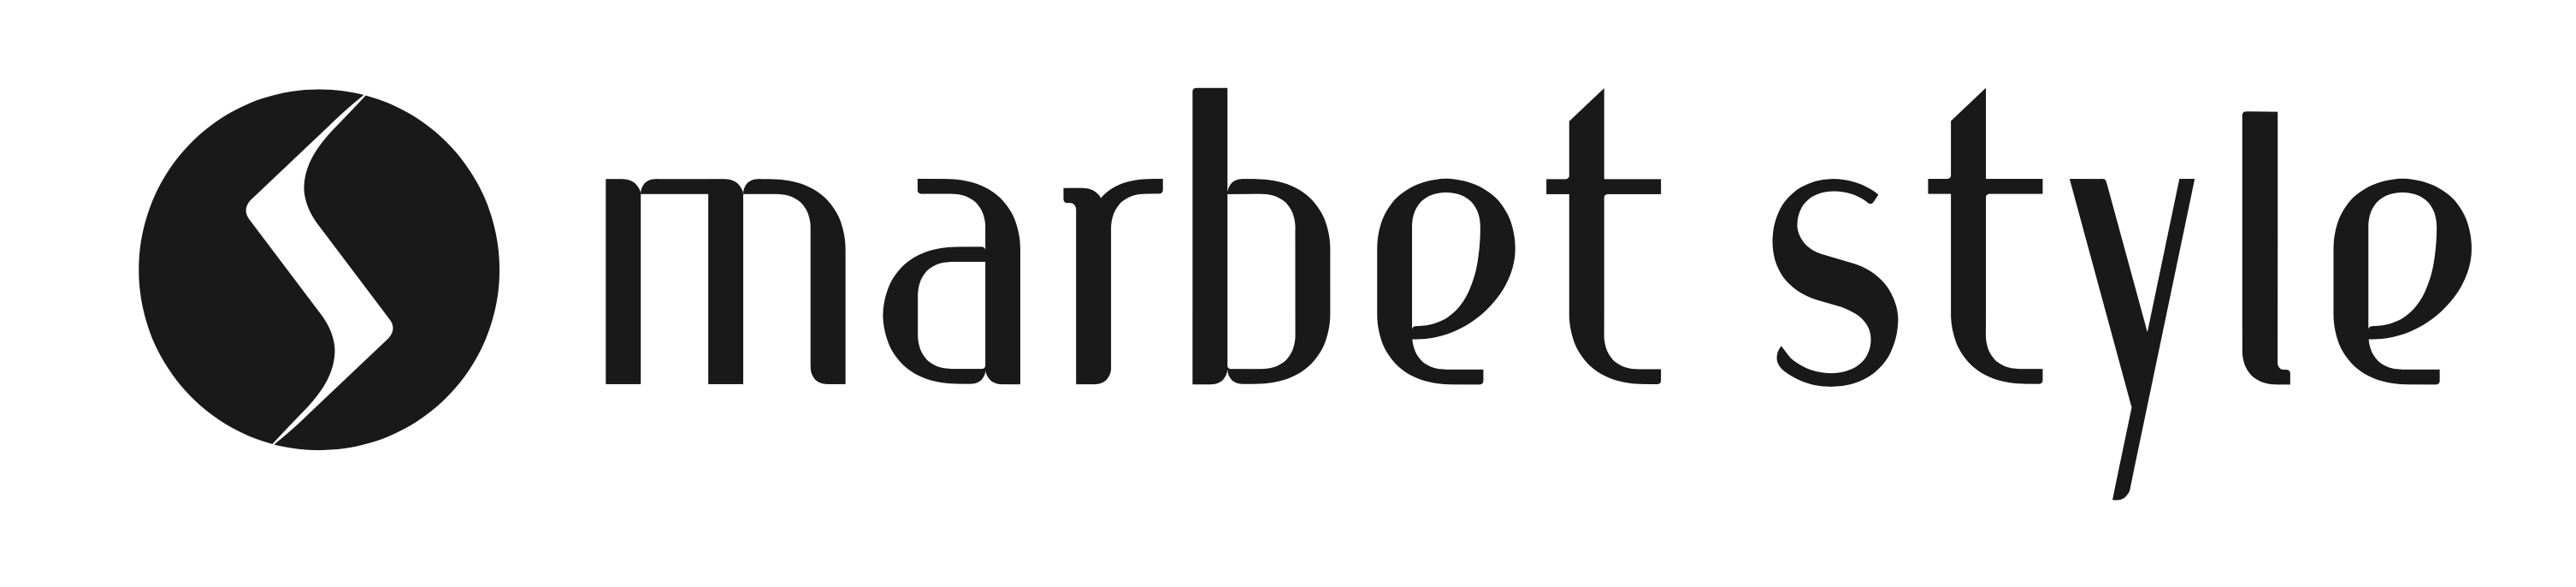 Marbet Style Logo